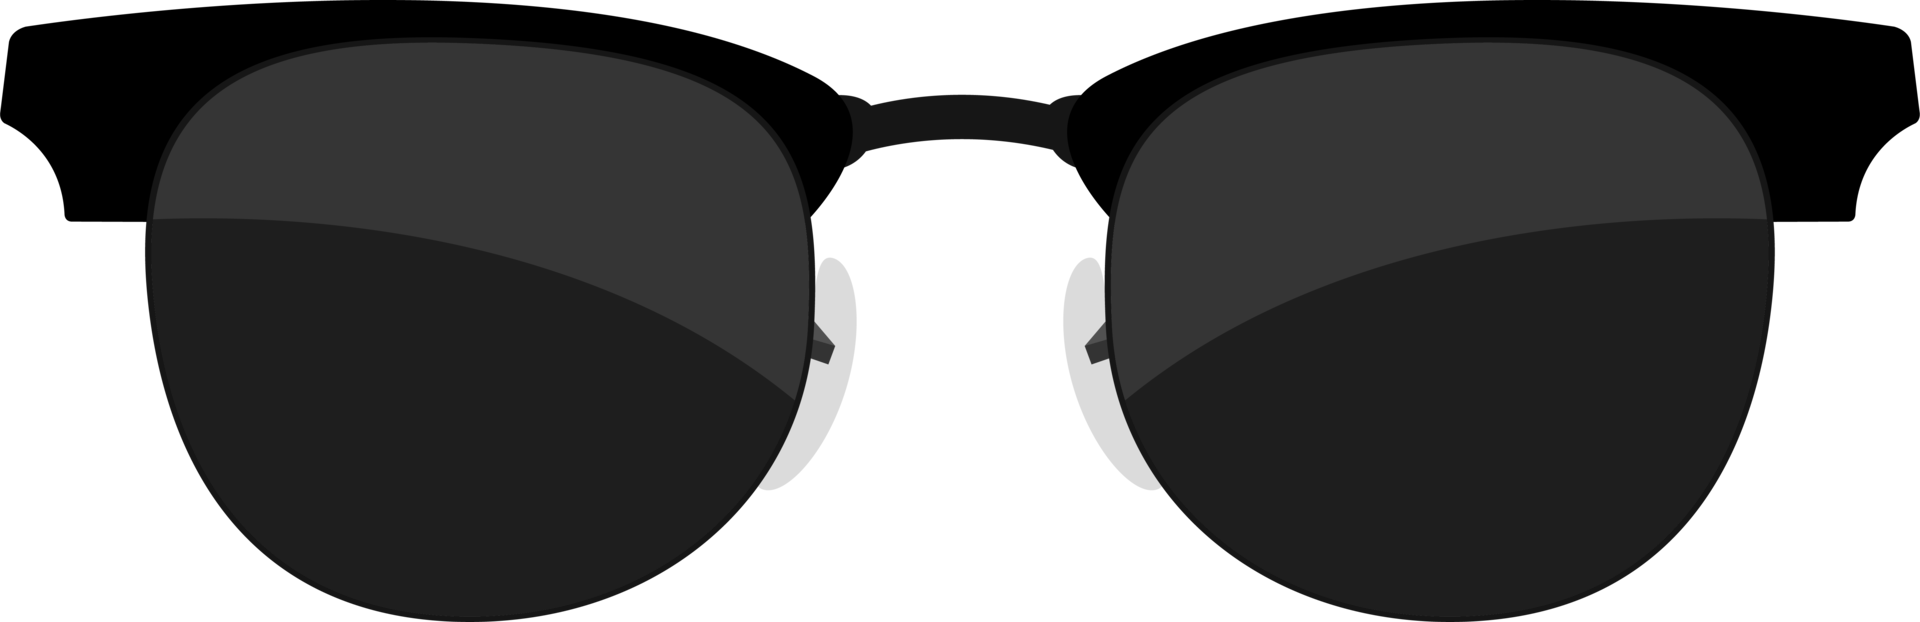 ilustração de design de clipart de óculos de sol png